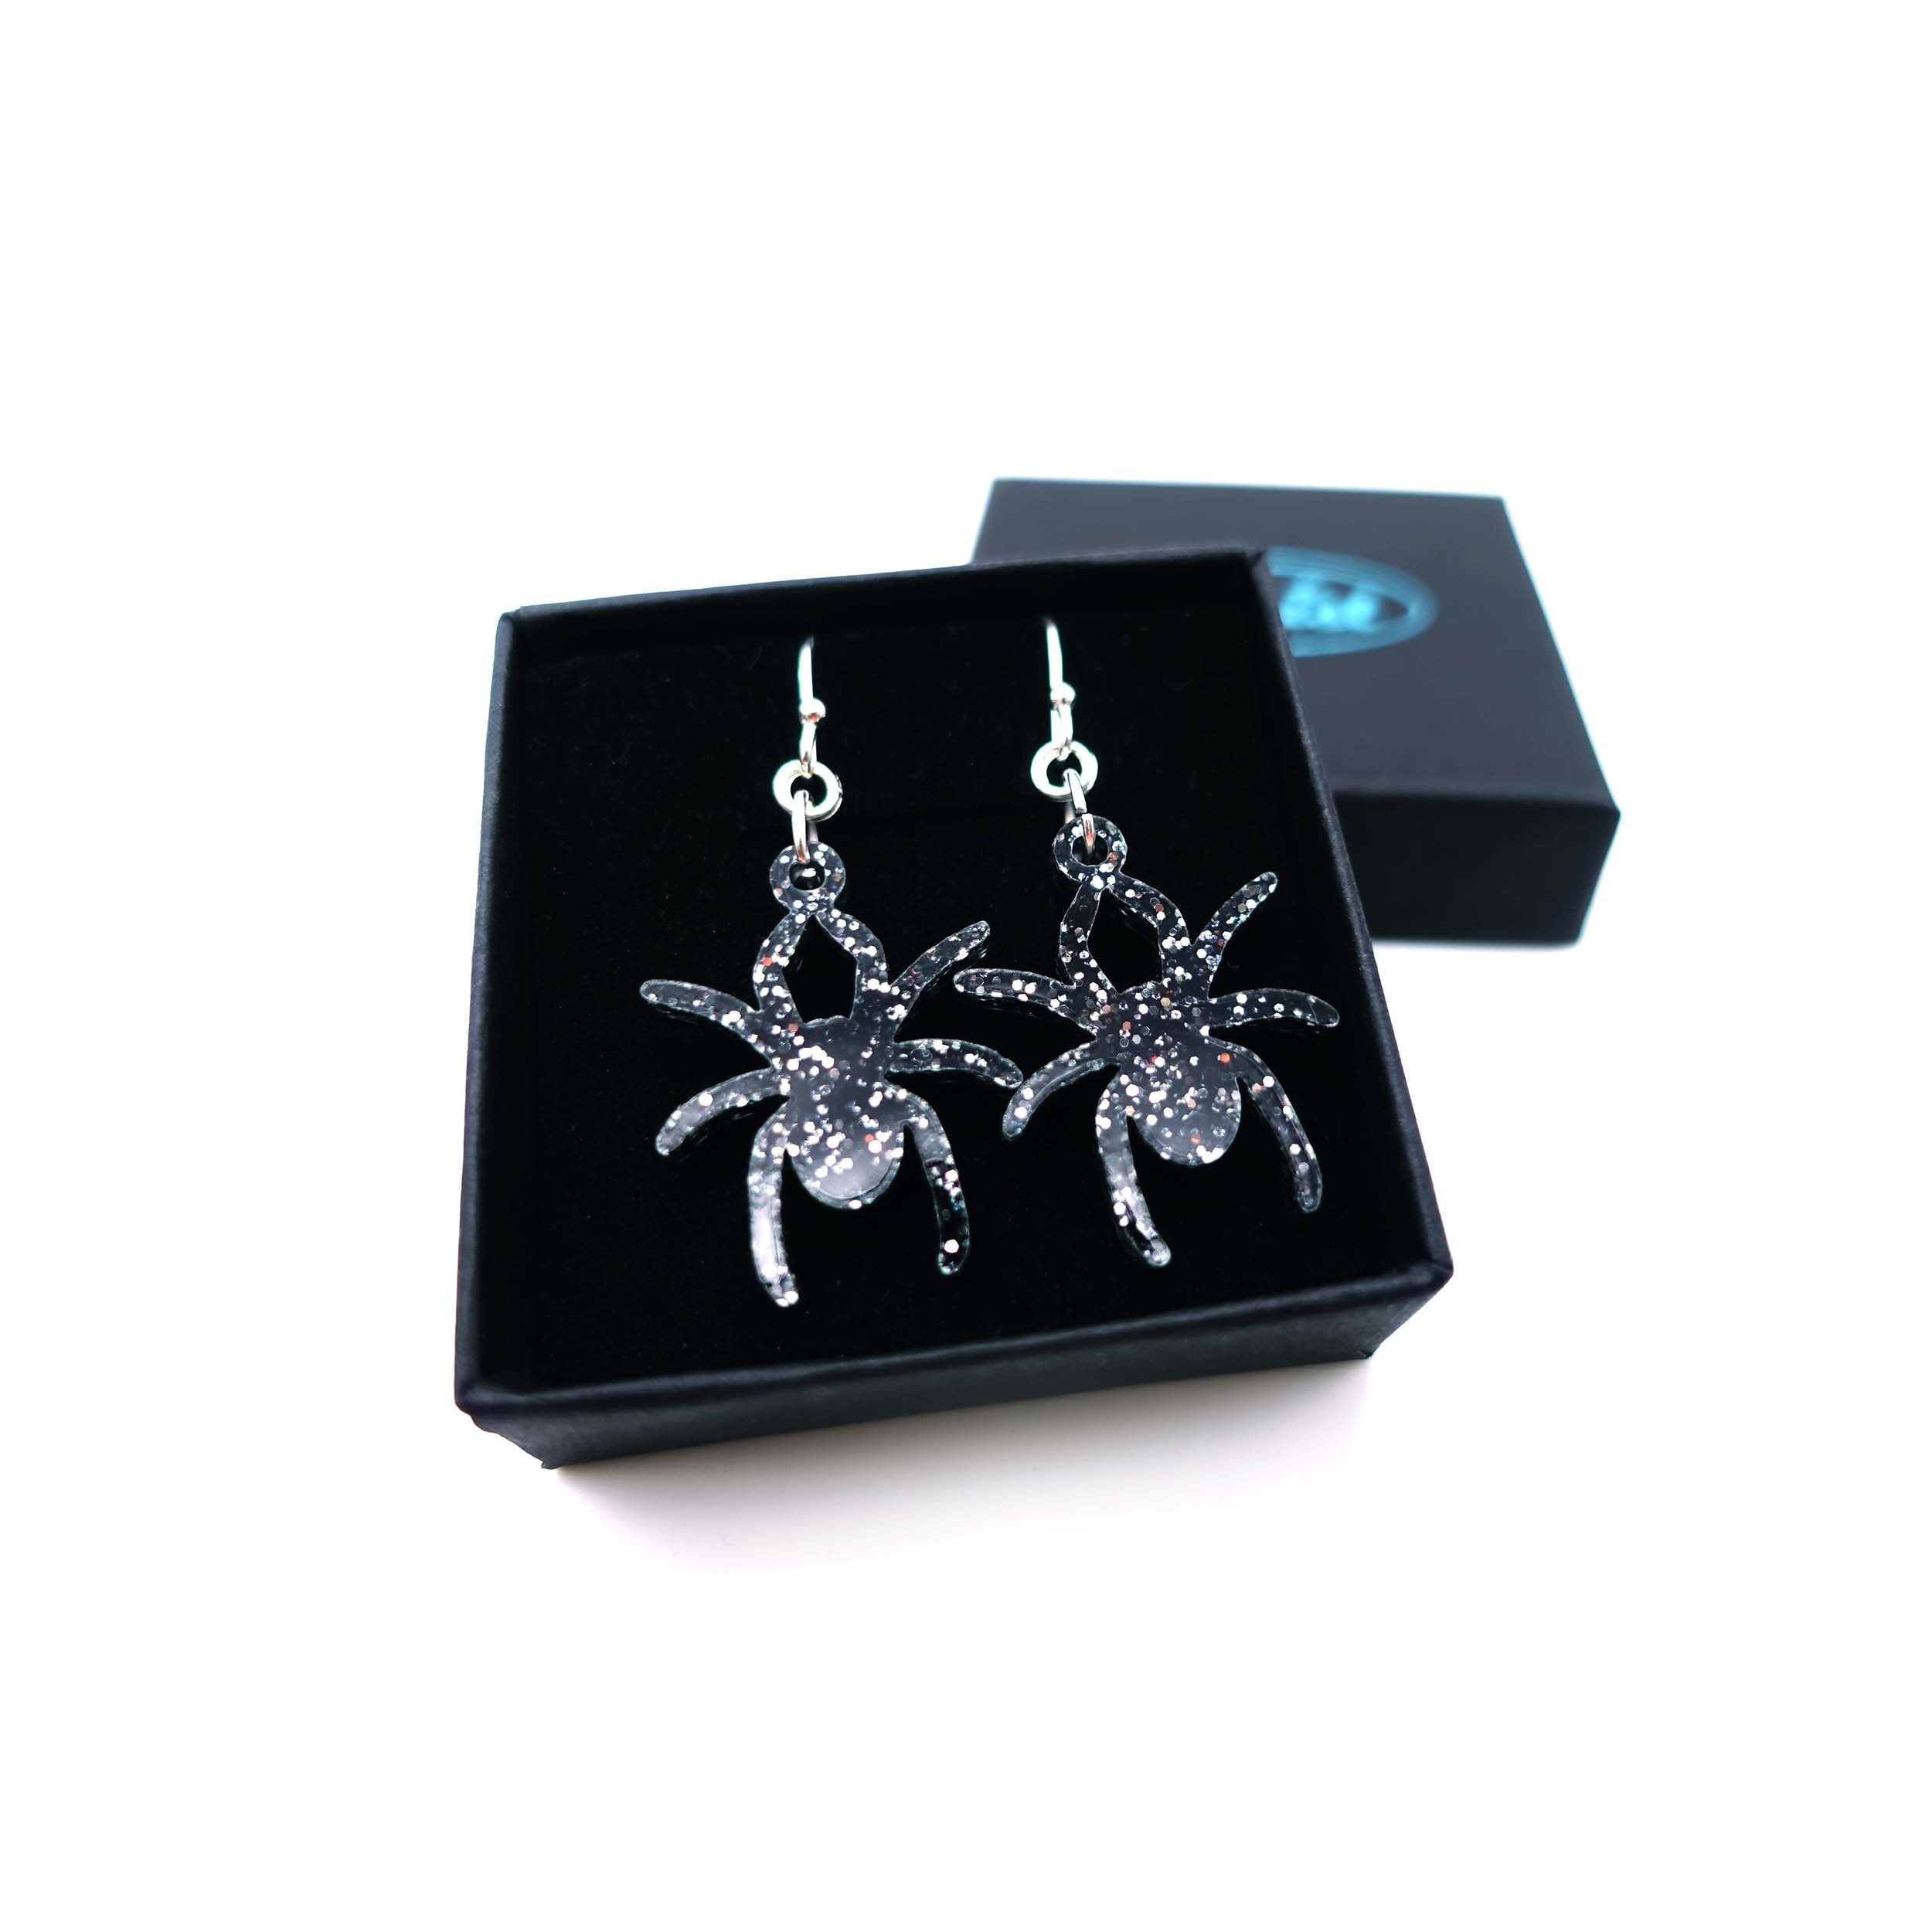 Lady Hale commemorative spider earrings in black glitter shown in box.